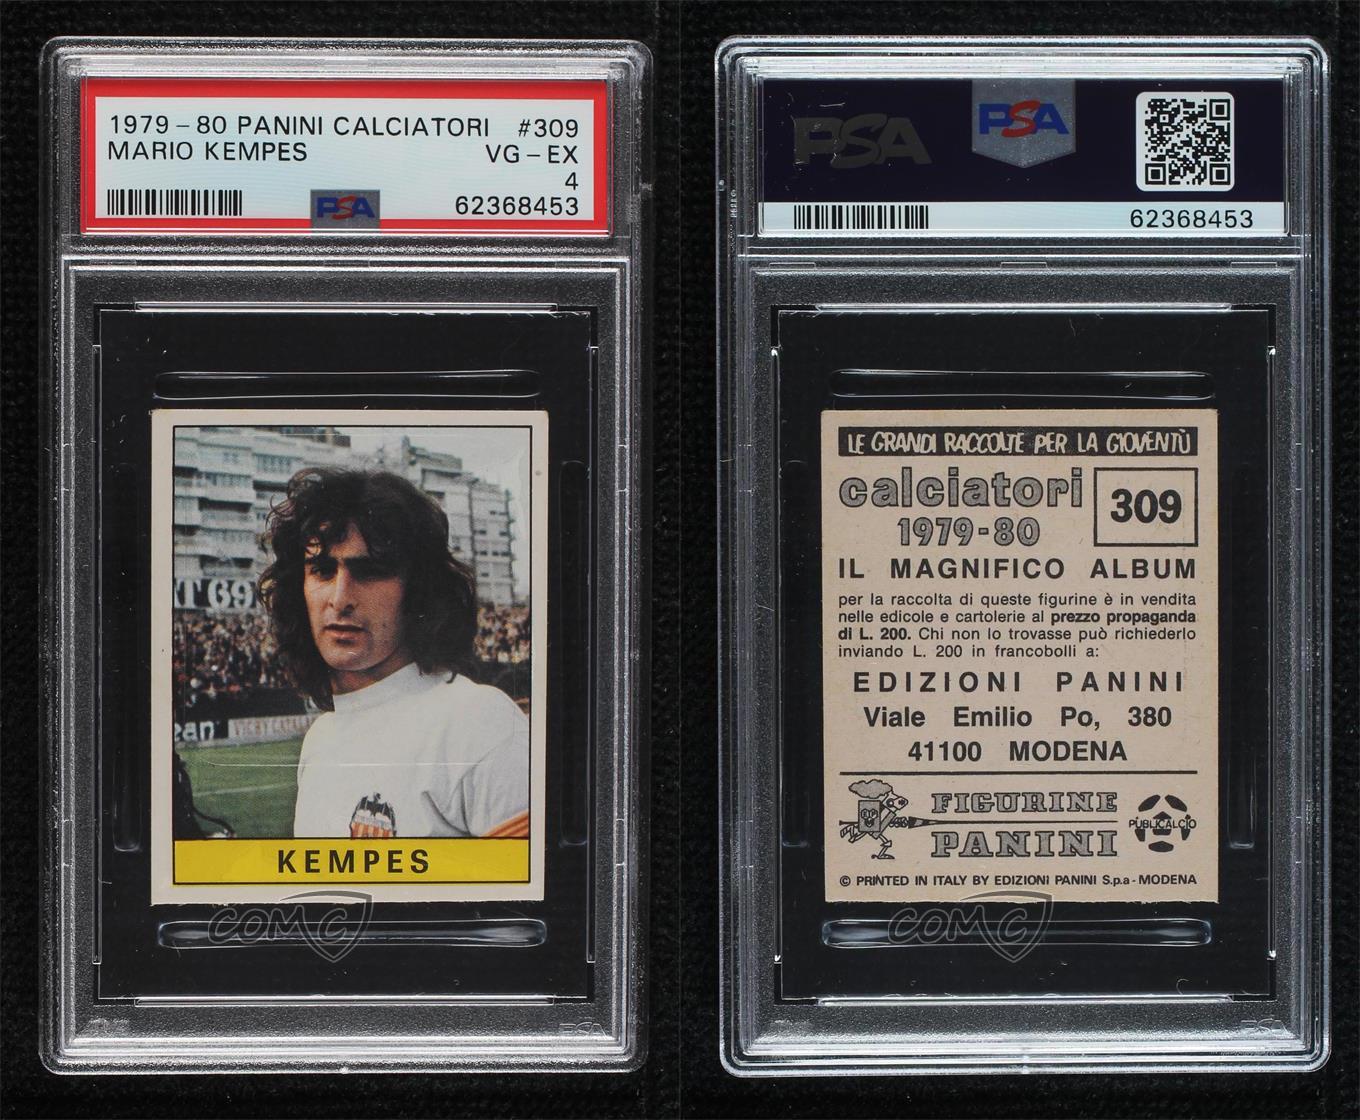 1979-80 Panini Calciatori Mario Kempes #309 PSA 4 | eBay